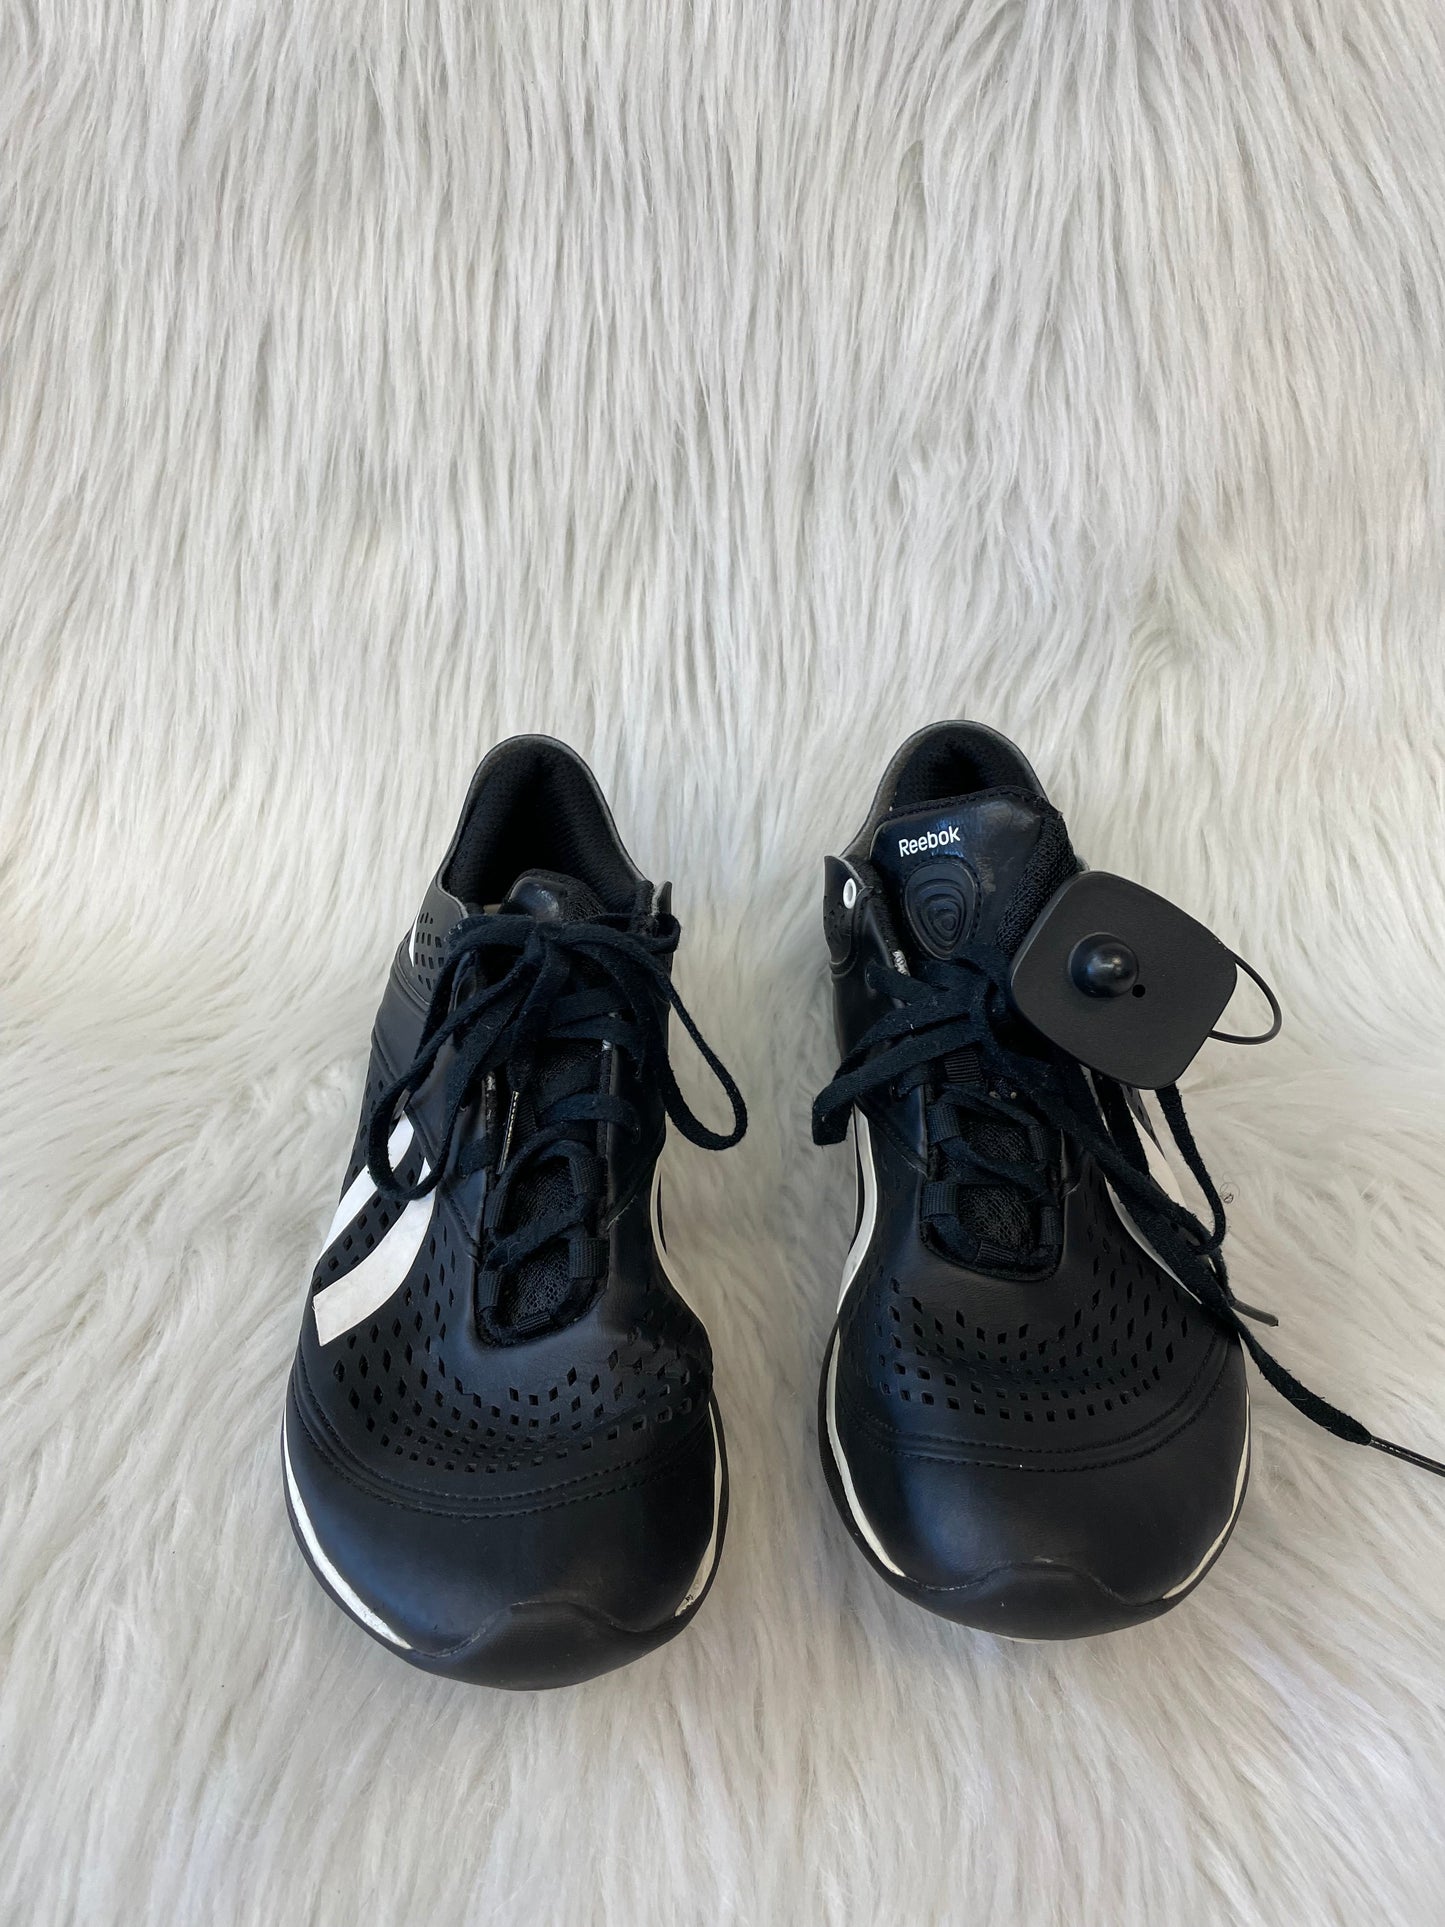 Black & White Shoes Athletic Reebok, Size 8